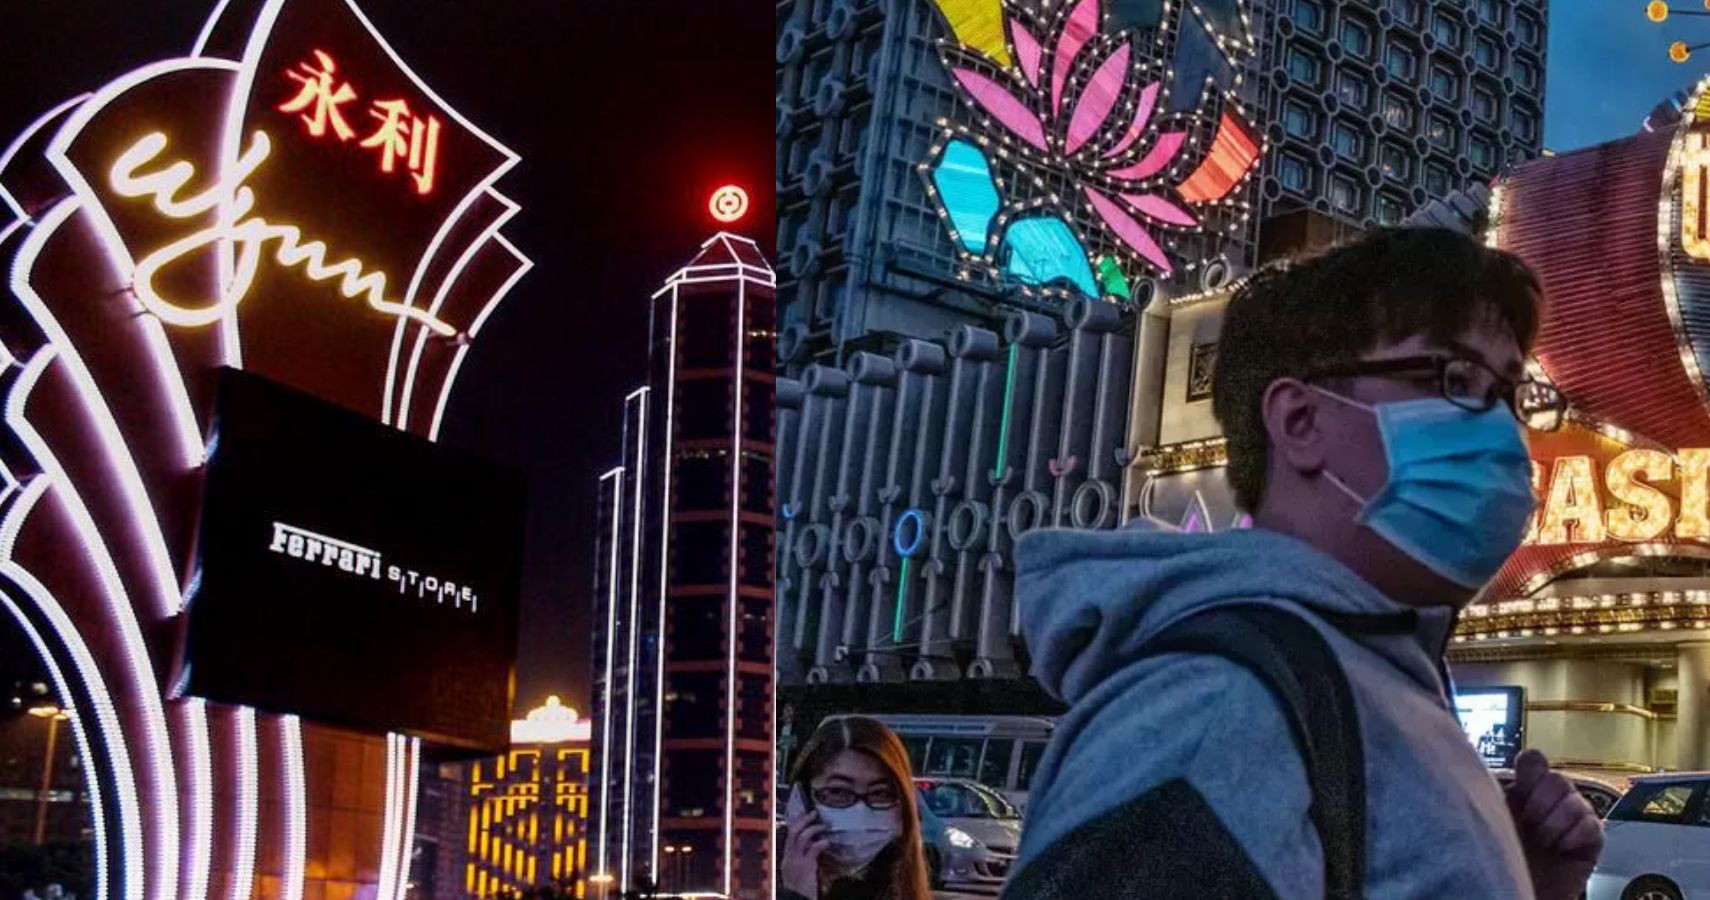 Wynn Casino and masked pedestrians in Macau China